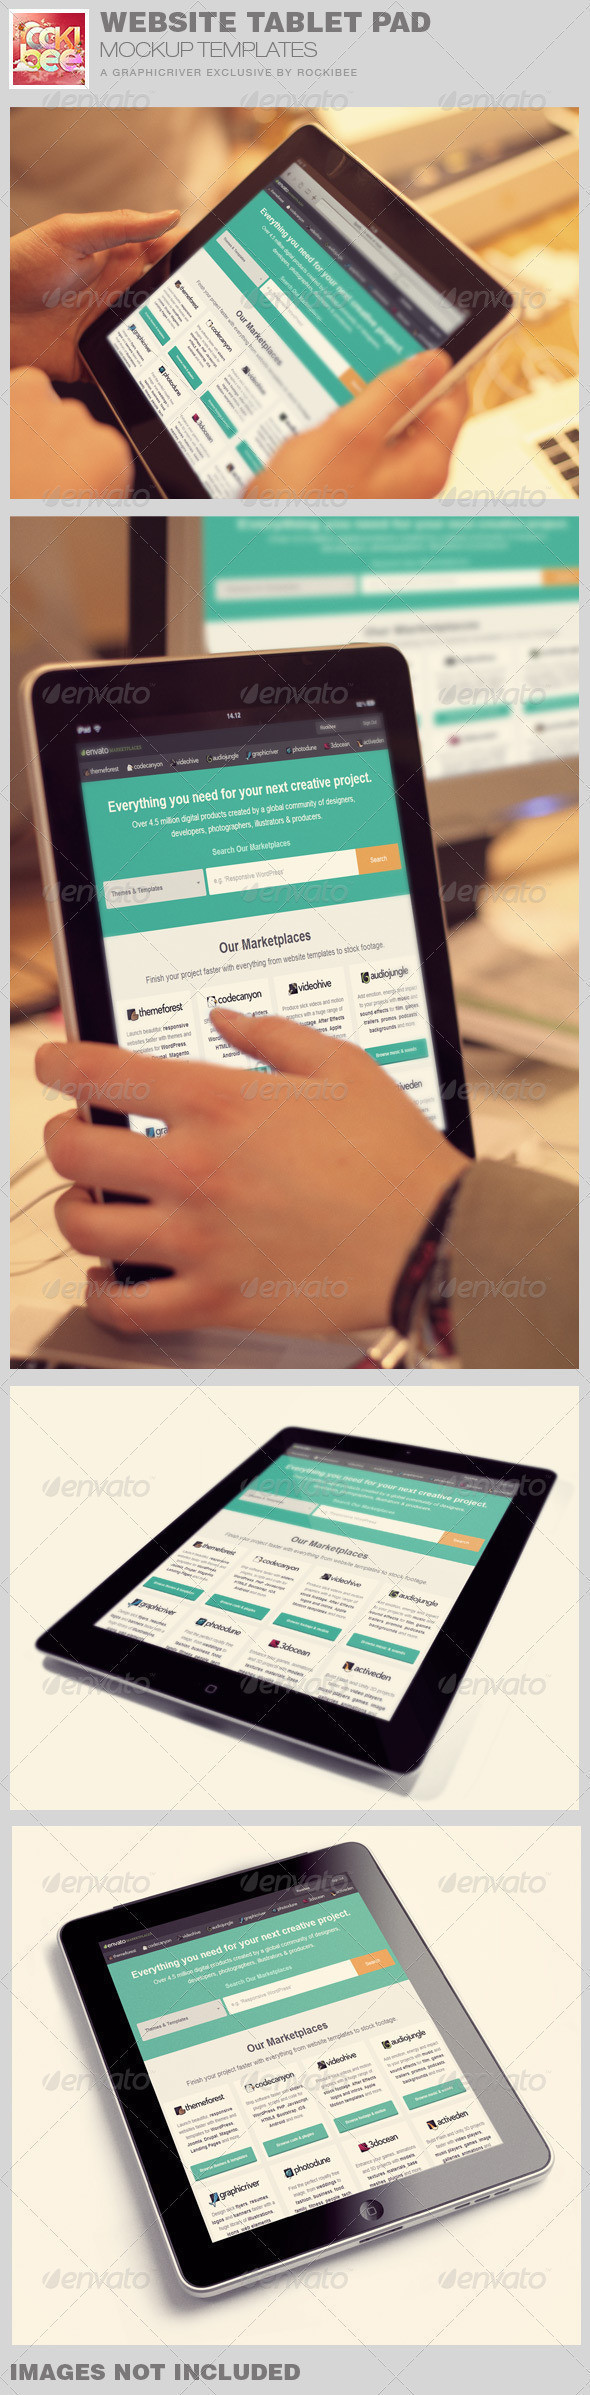 Website tablet pad mockup image preview